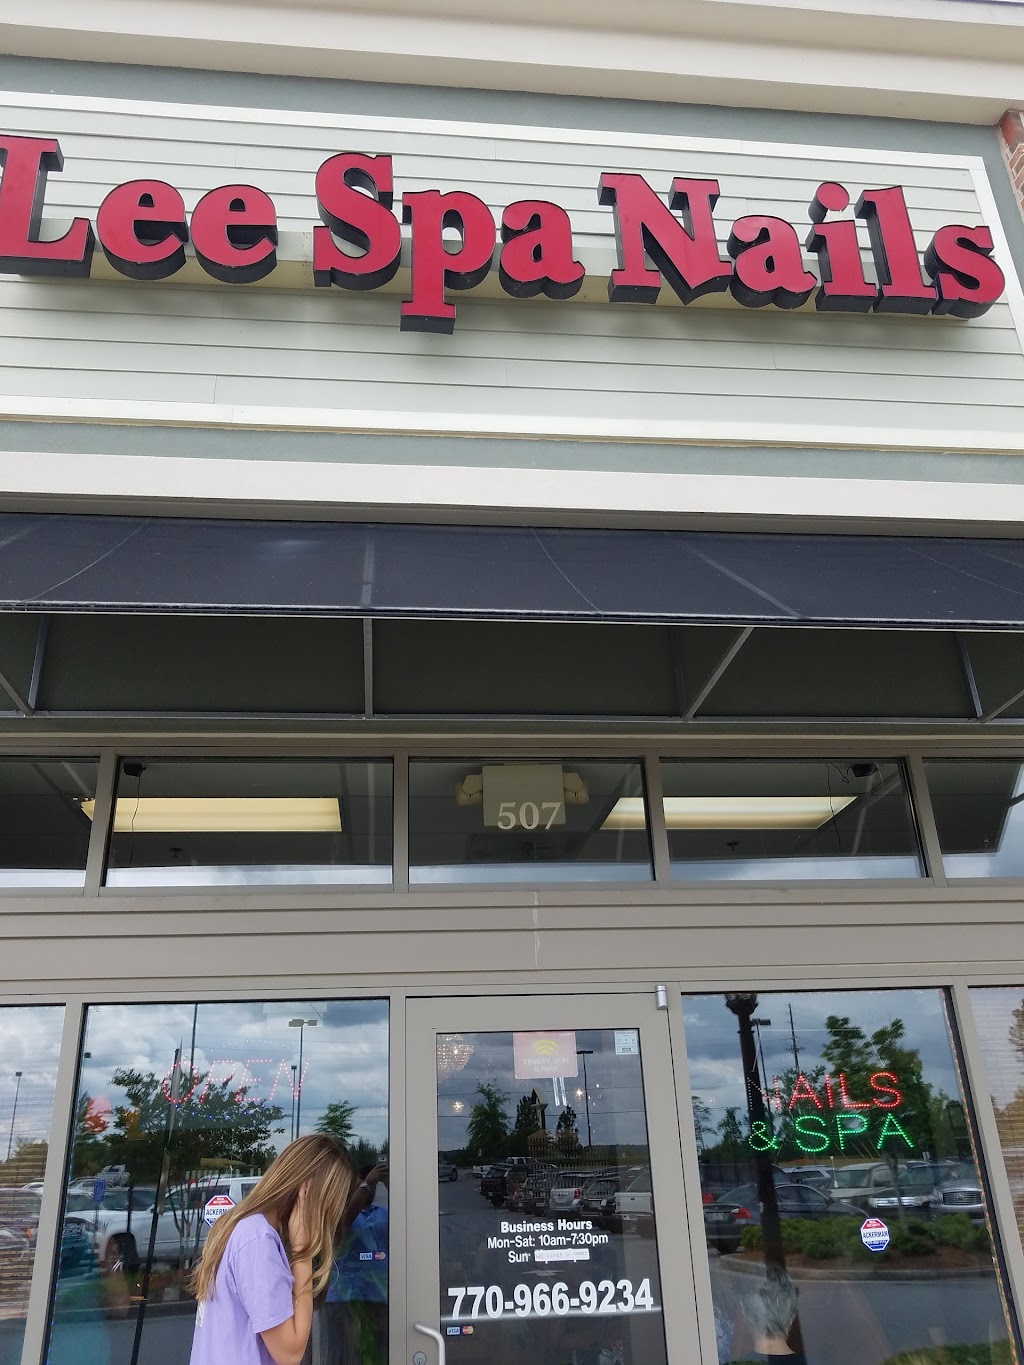 Lee Spa Nails | 80 Seven Hills Blvd # 507, Dallas, GA 30132 | Phone: (770) 966-9234